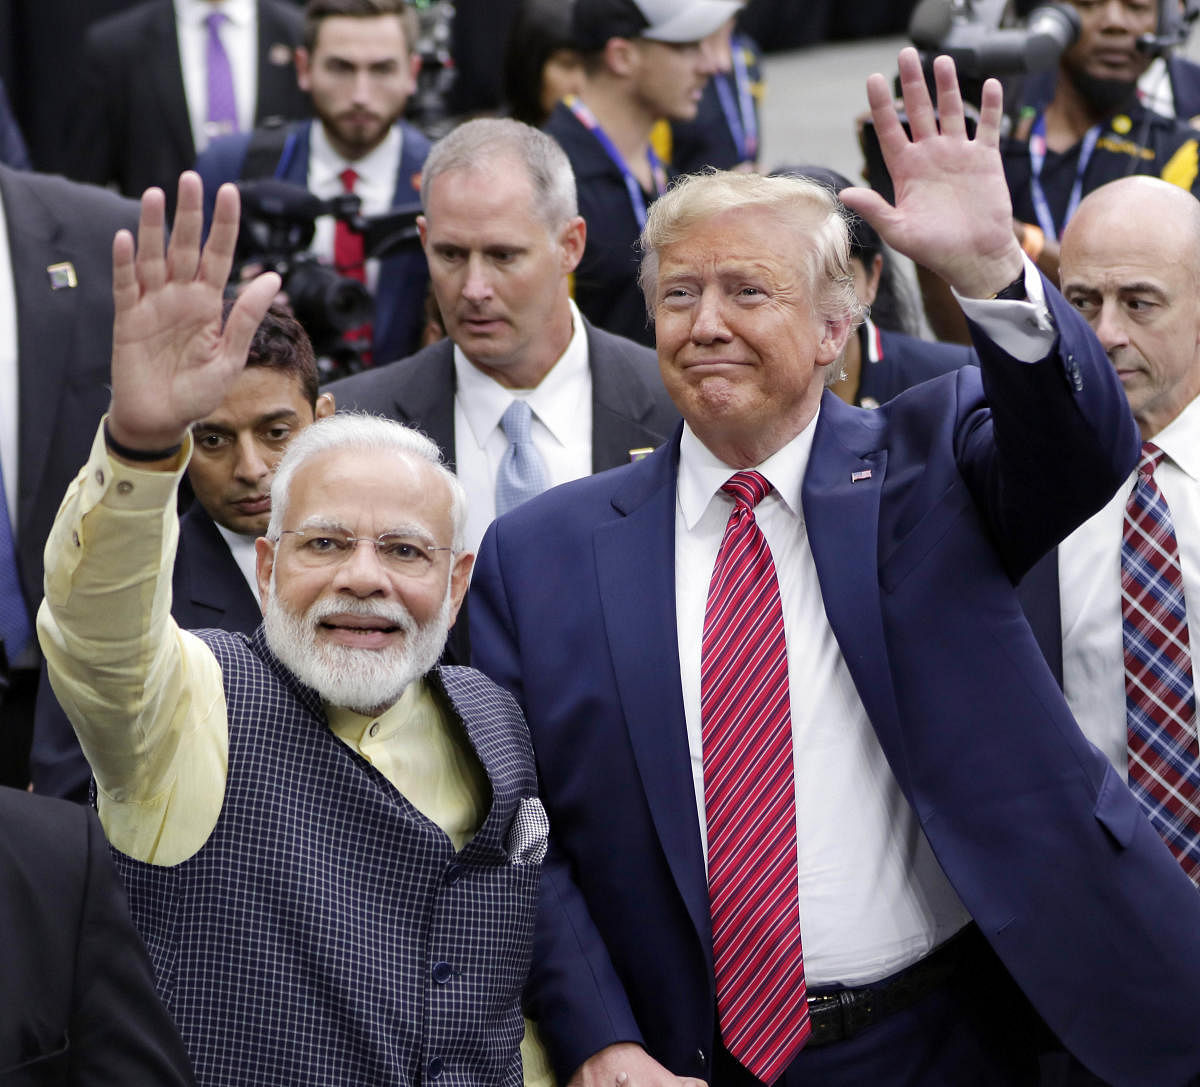 Prime Minister Narendra Modi and President Donald Trump. (AP/PTI) Photo)